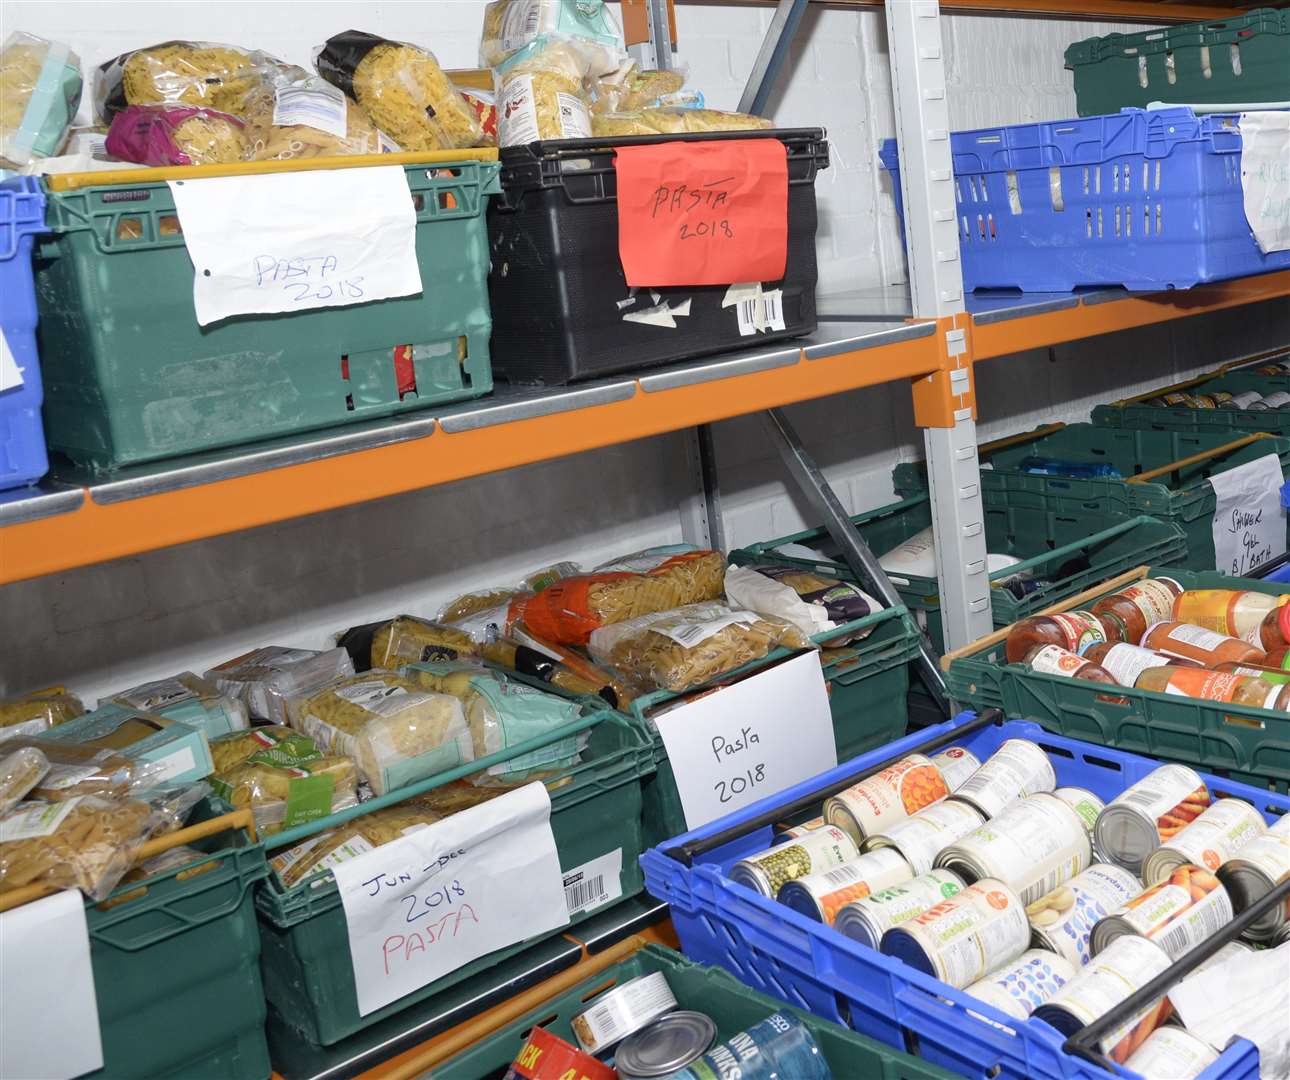 Trussell Trust foodbank release statistics for Kent